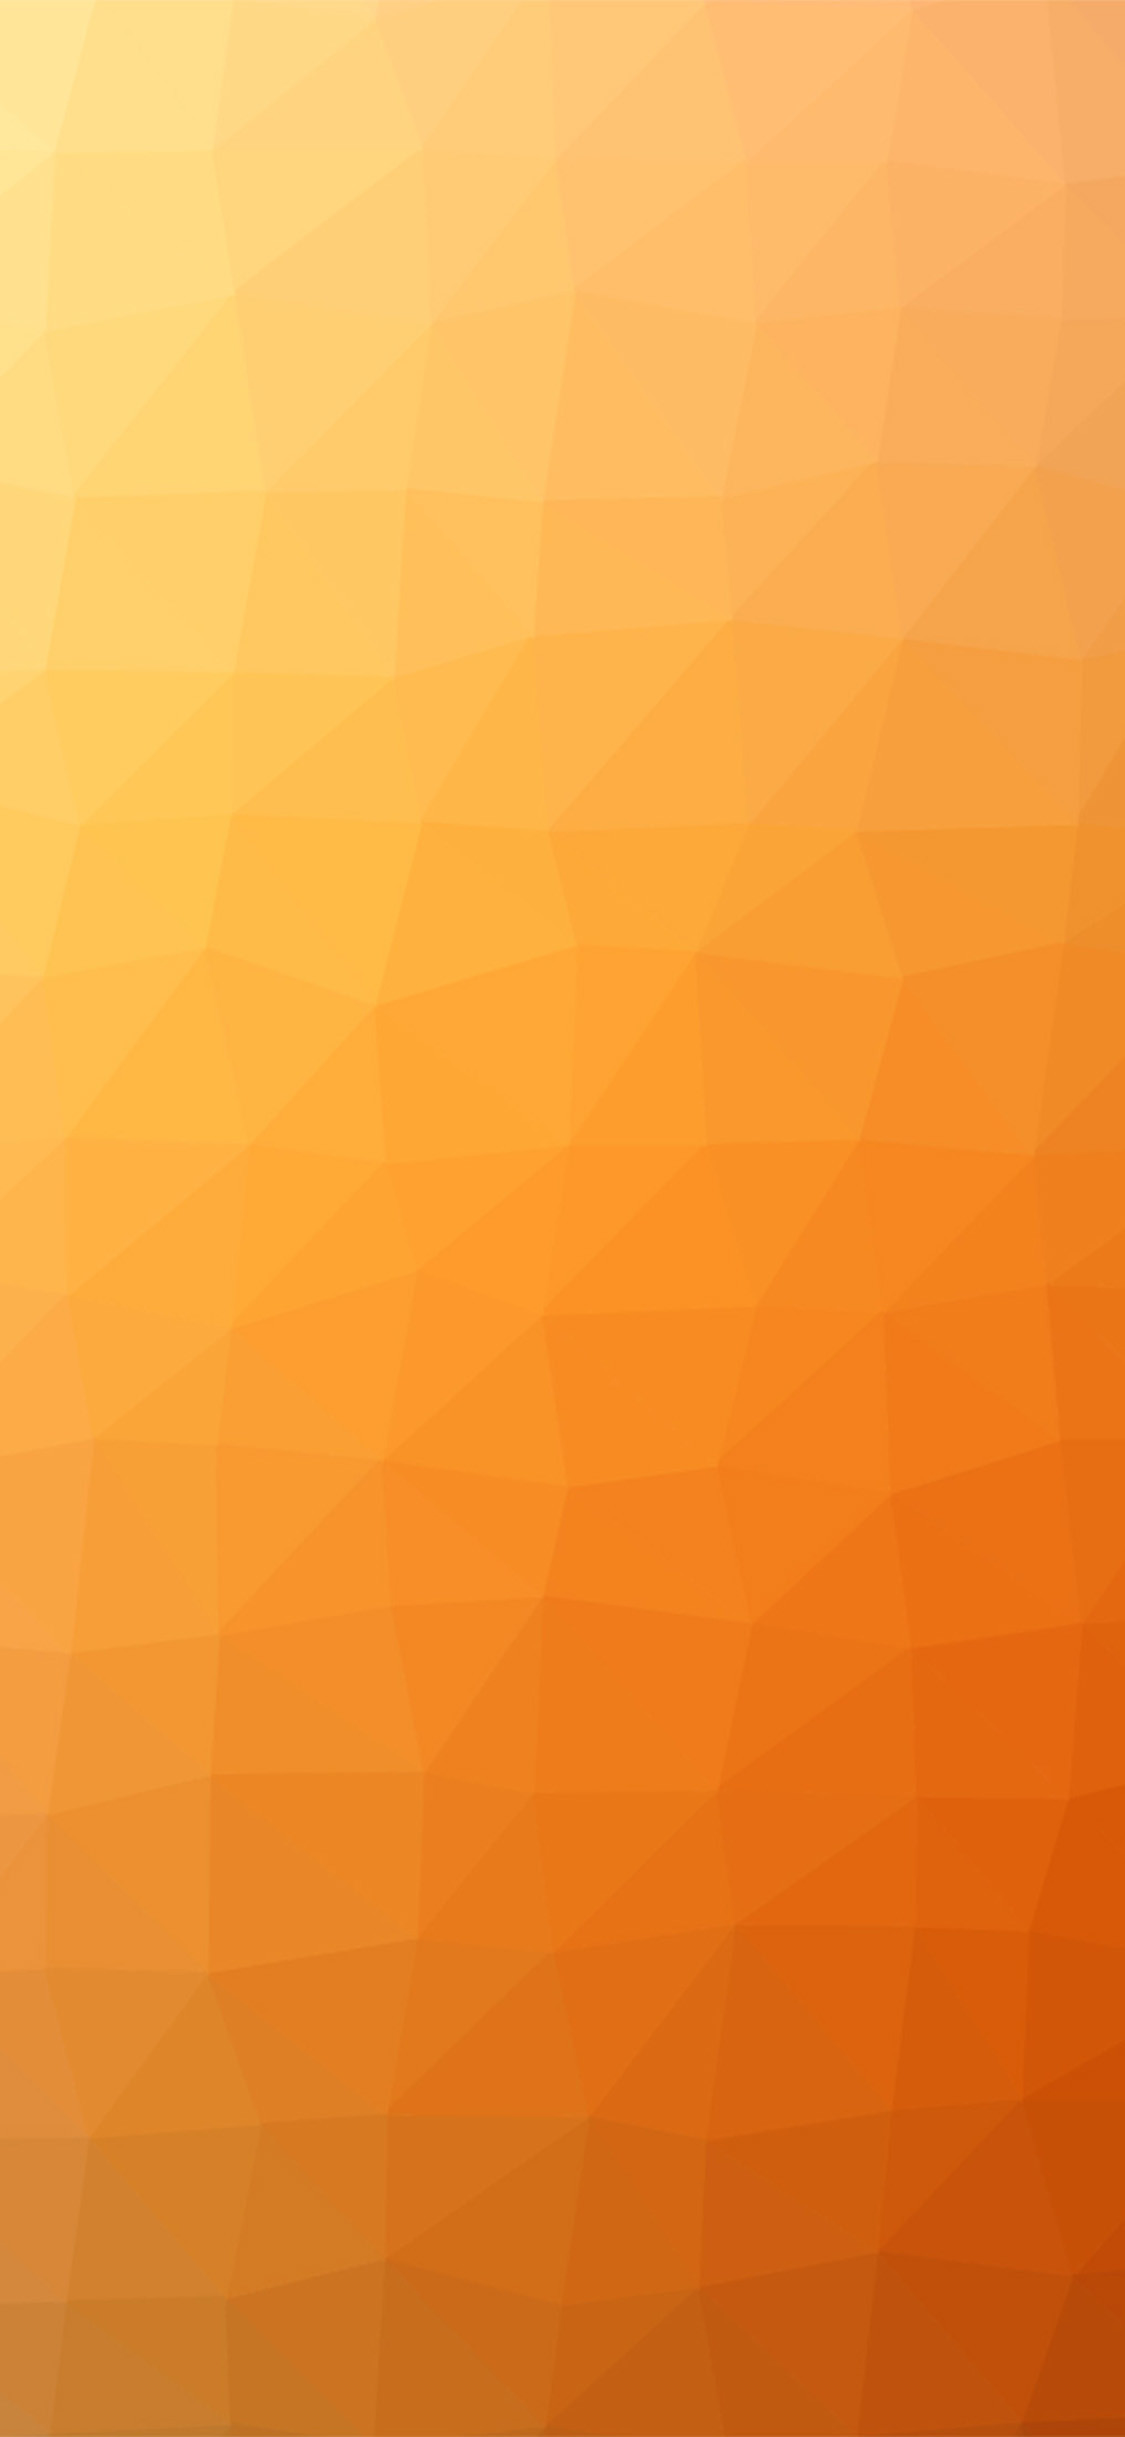 1125x2437 Orange polygon abstract pattern iPhone X Wallpaper